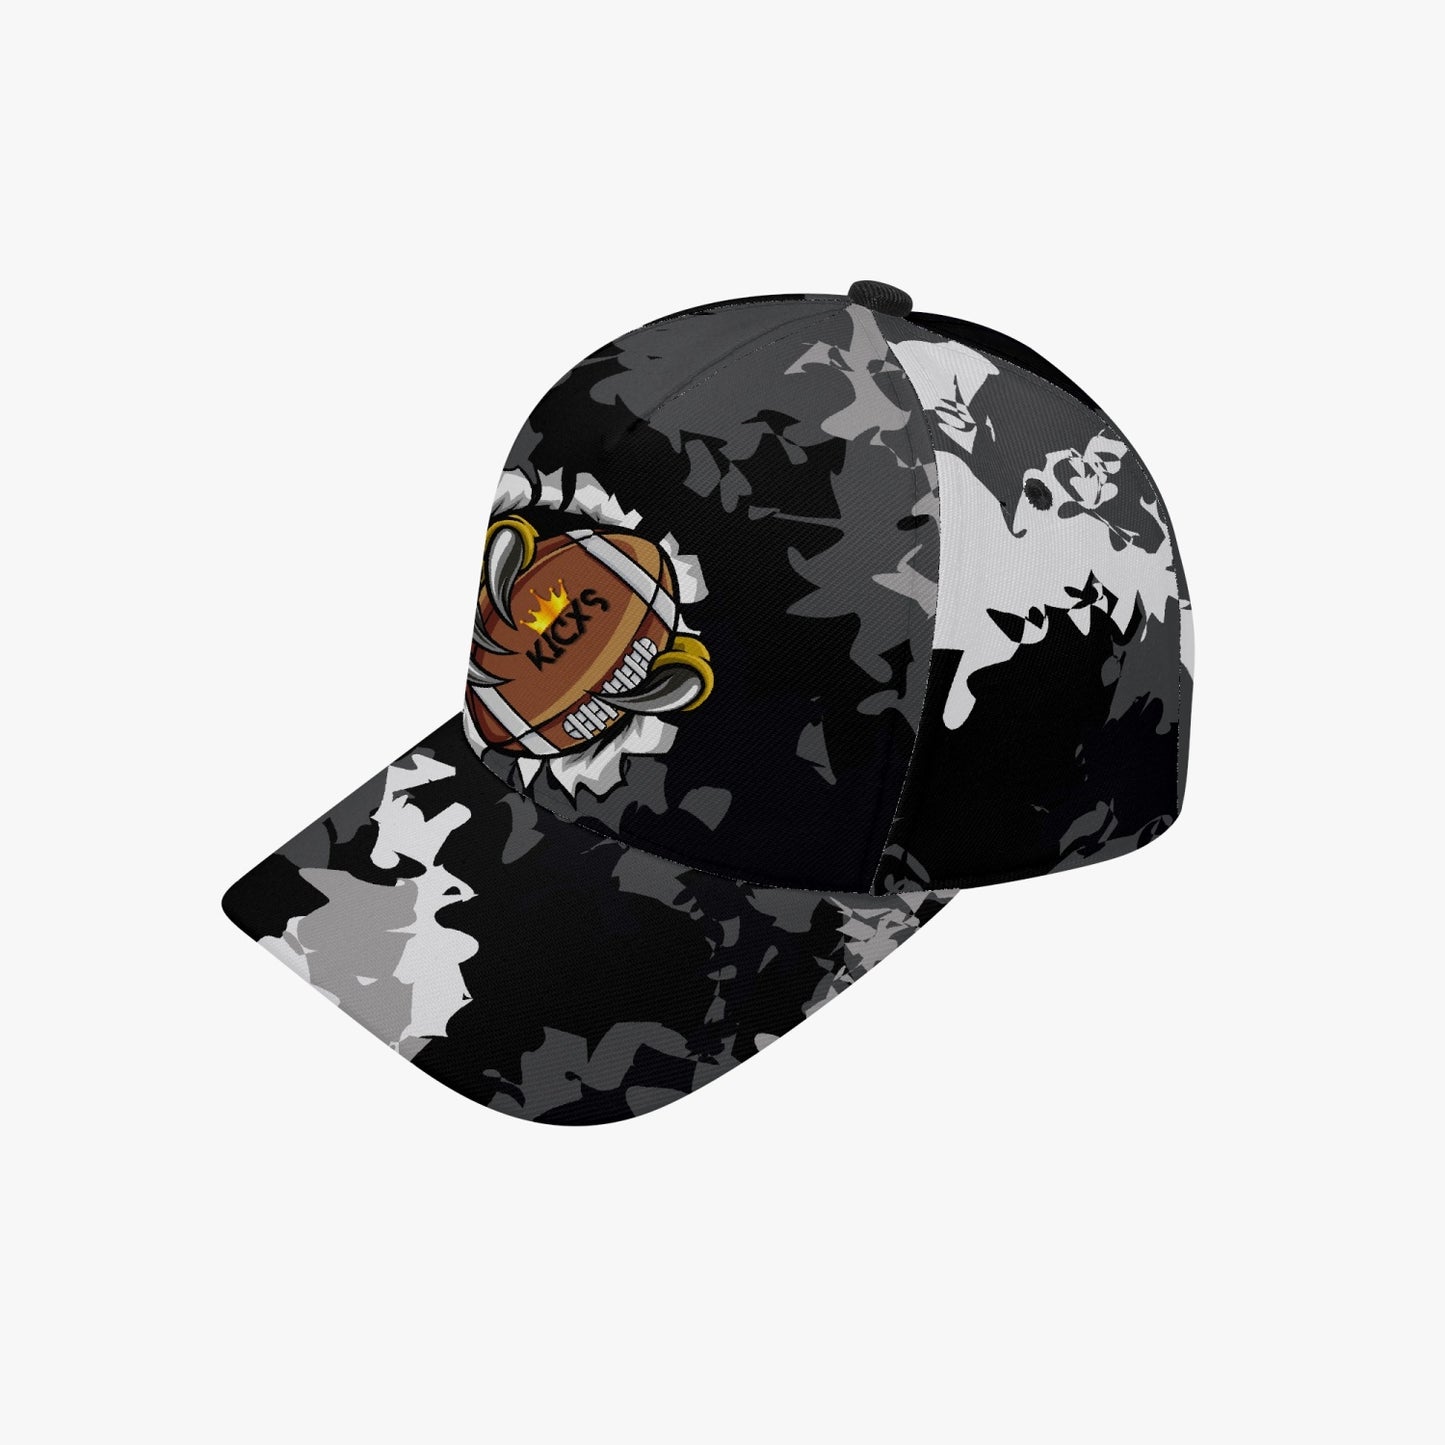 Kicxs Raiders Camouflage Sport Cap